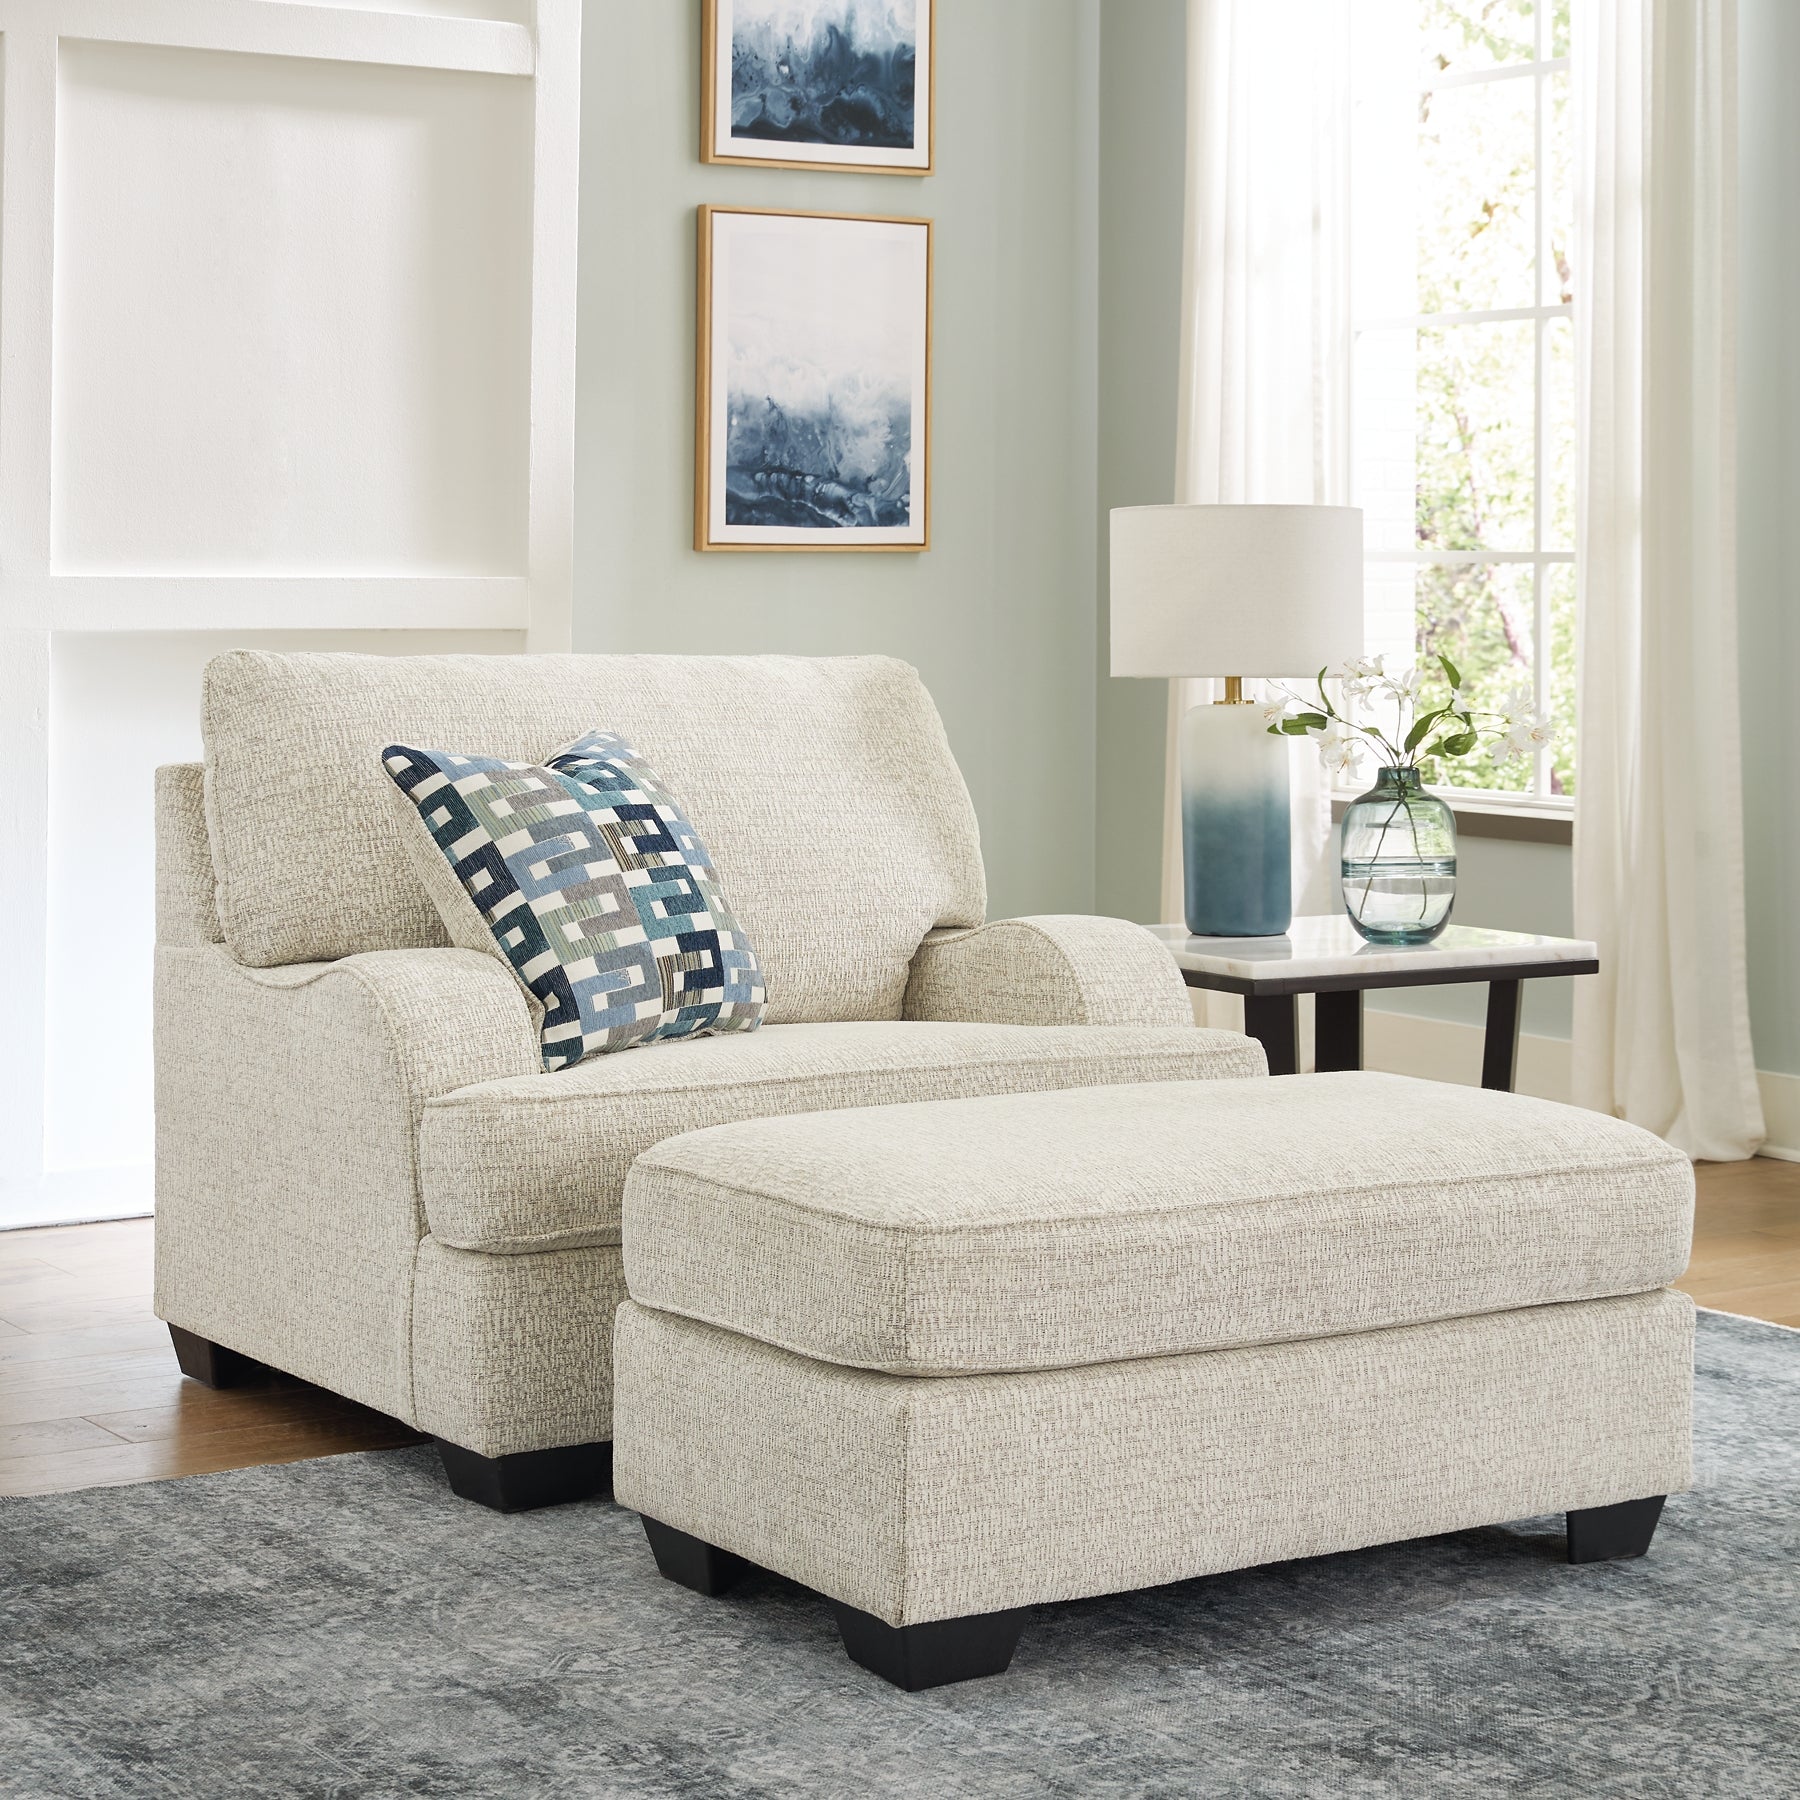 Valerano Chair and Ottoman at Cloud 9 Mattress & Furniture furniture, home furnishing, home decor